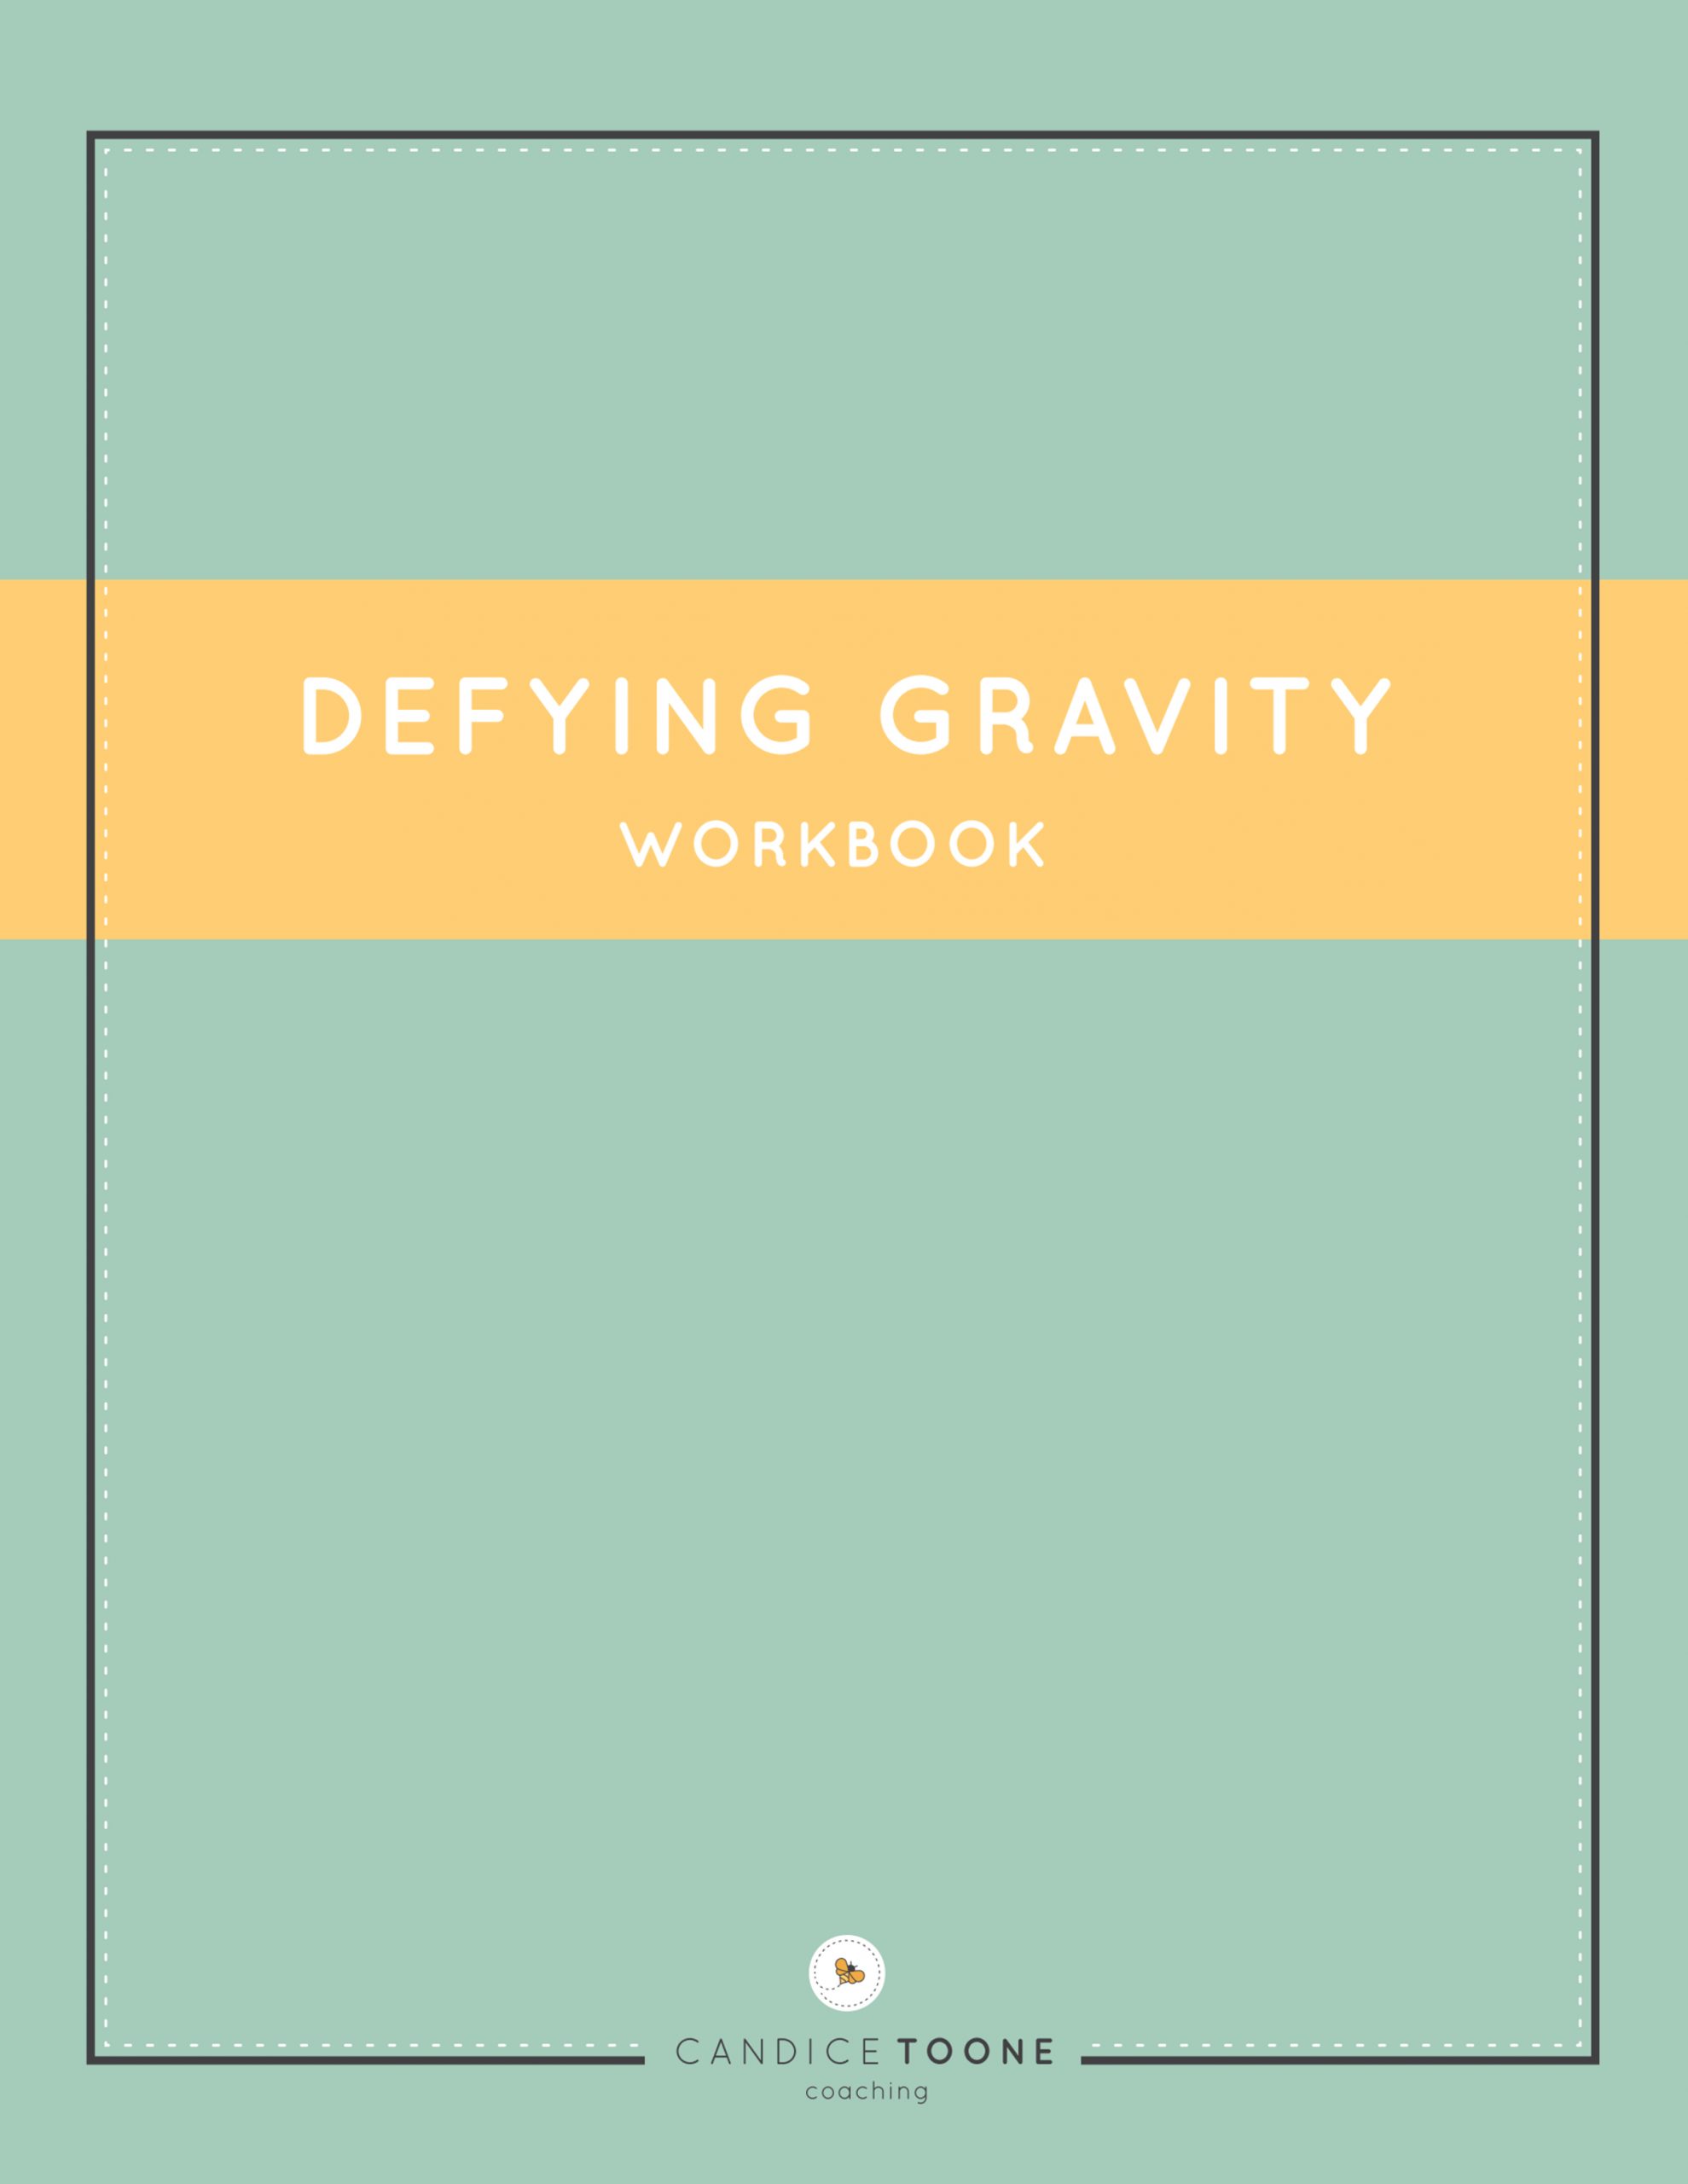 Defying gravity workbook cover